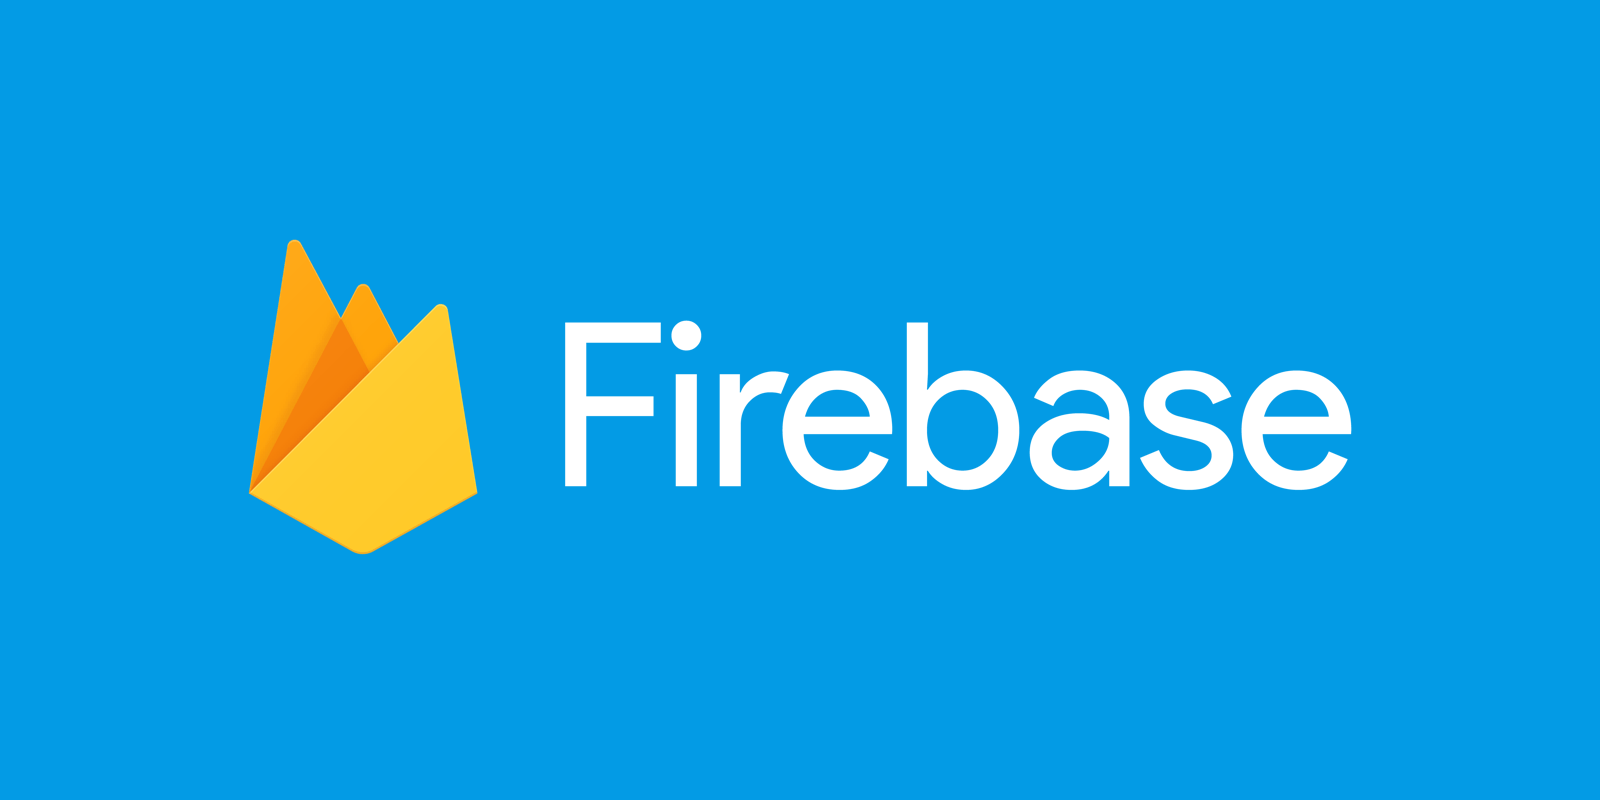 Firebase A comprehensive app development platform